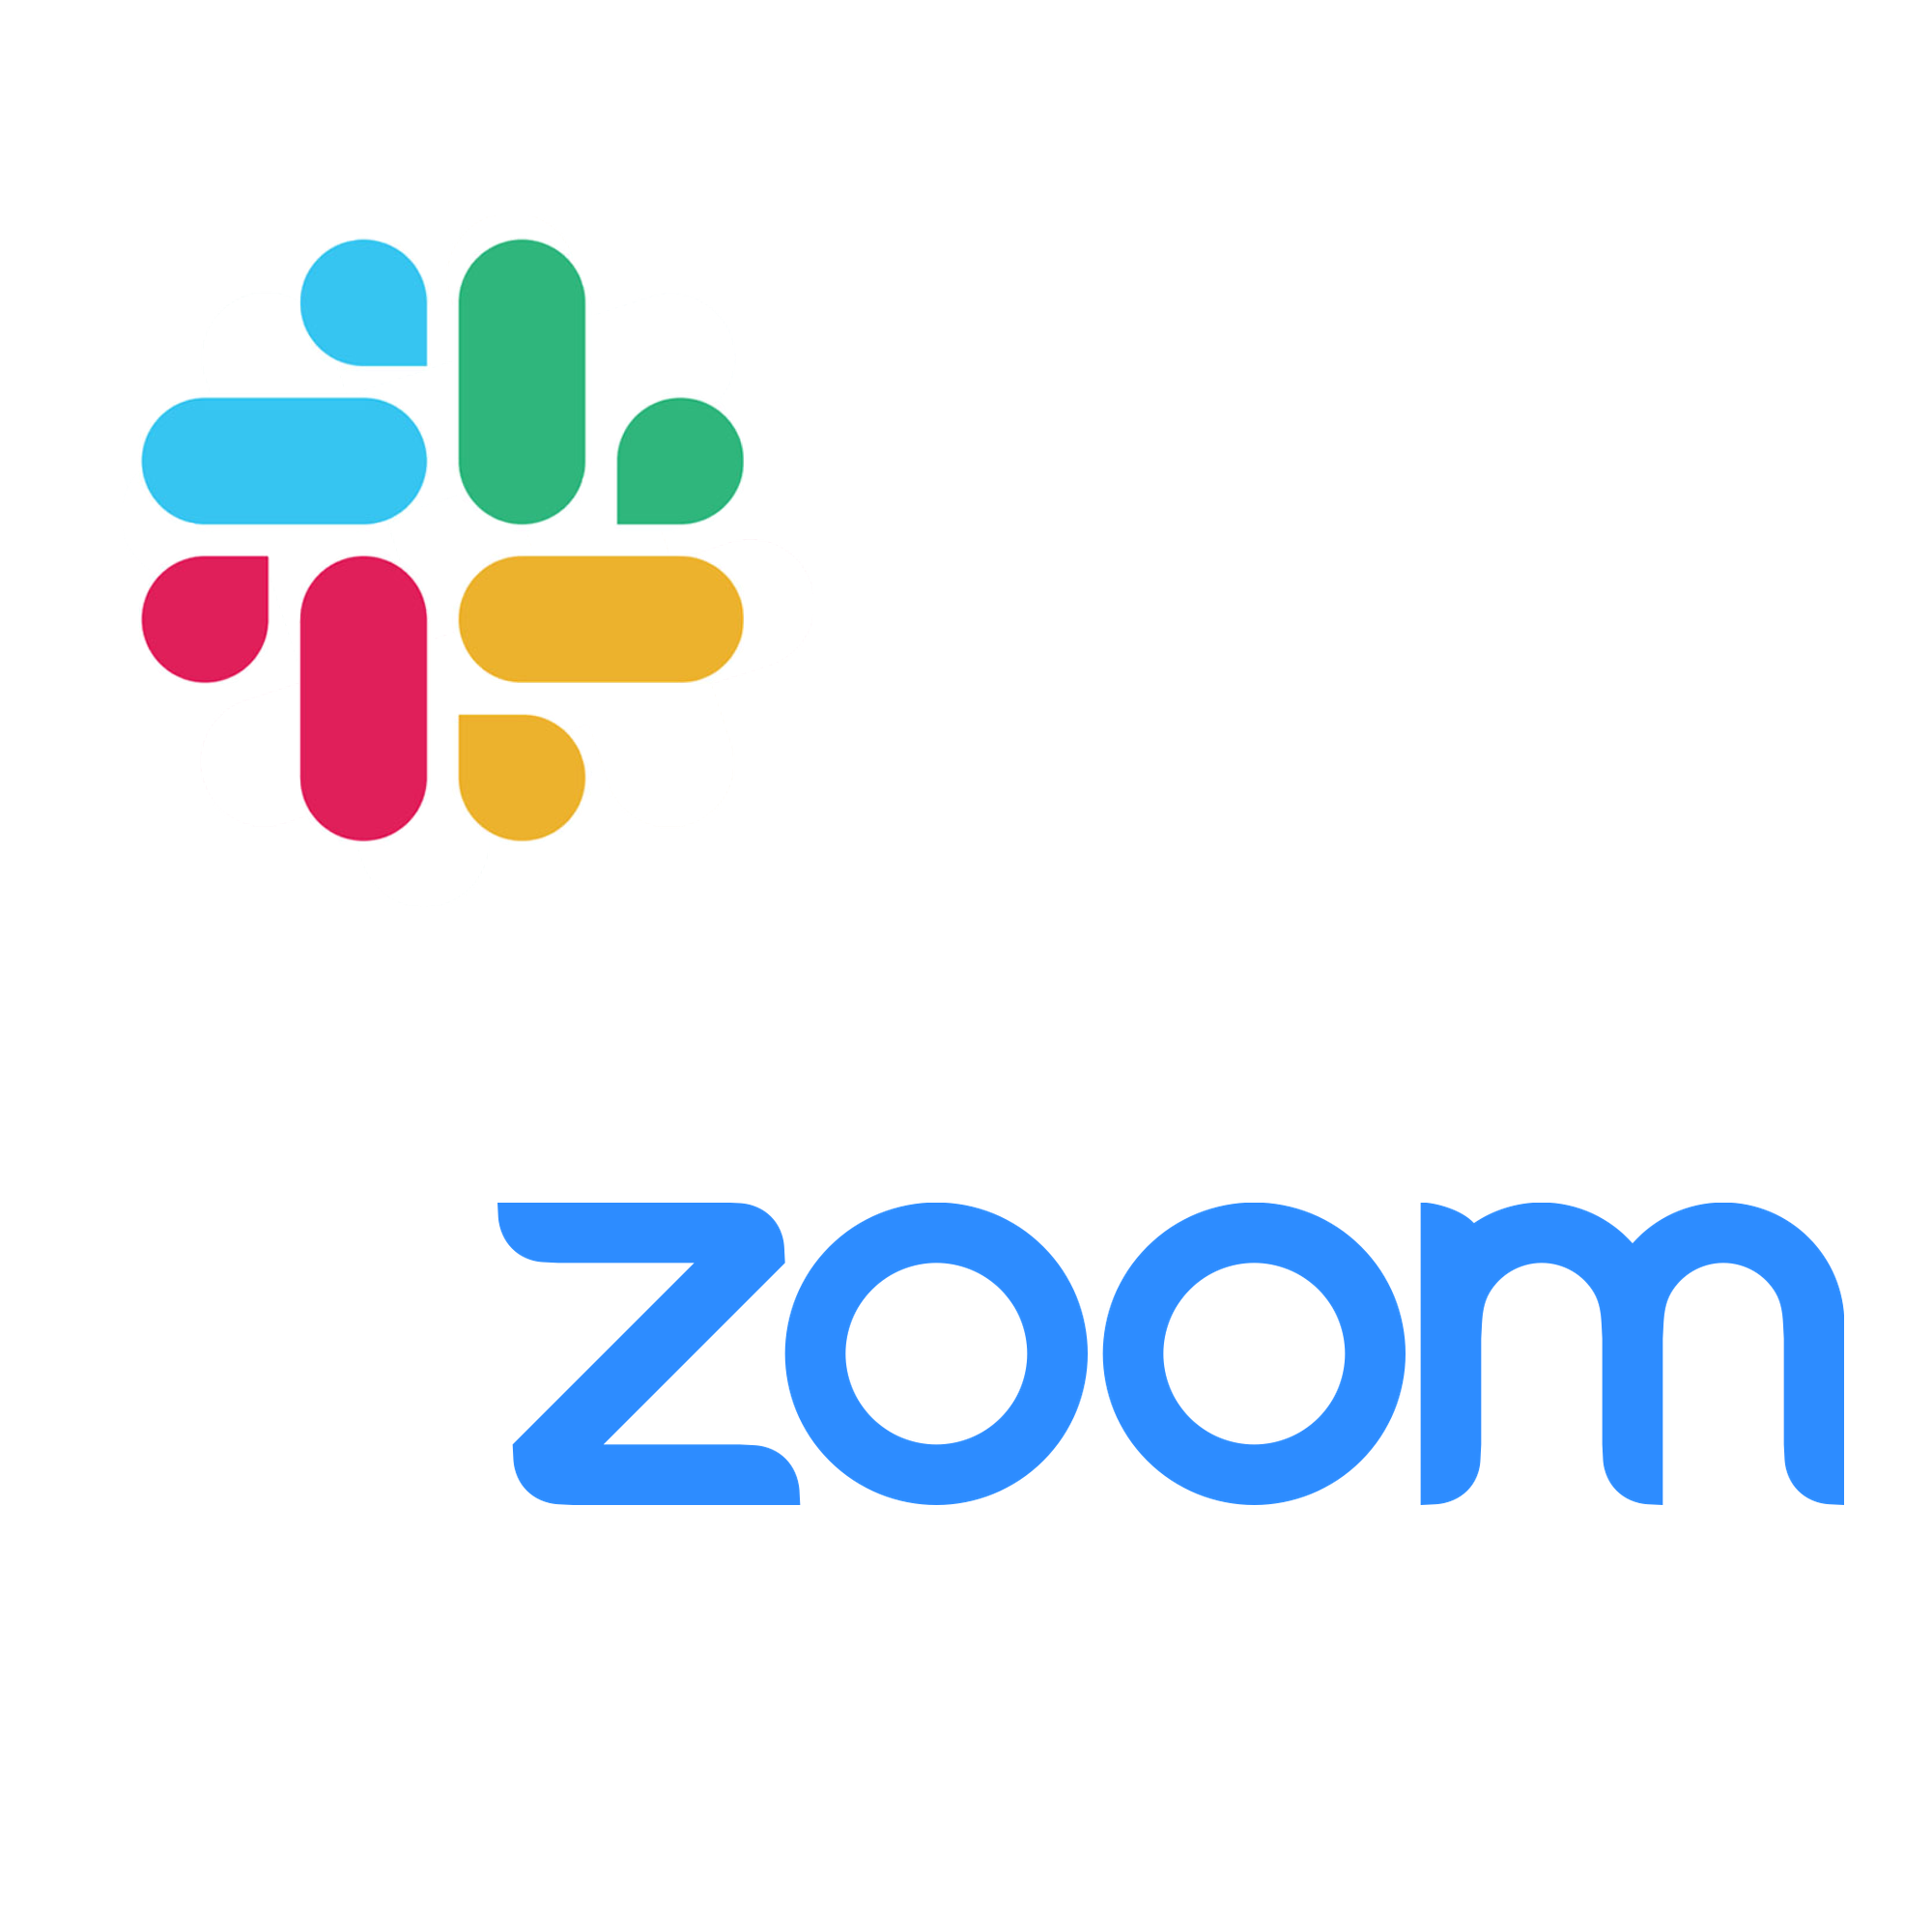 slack and zoom logos